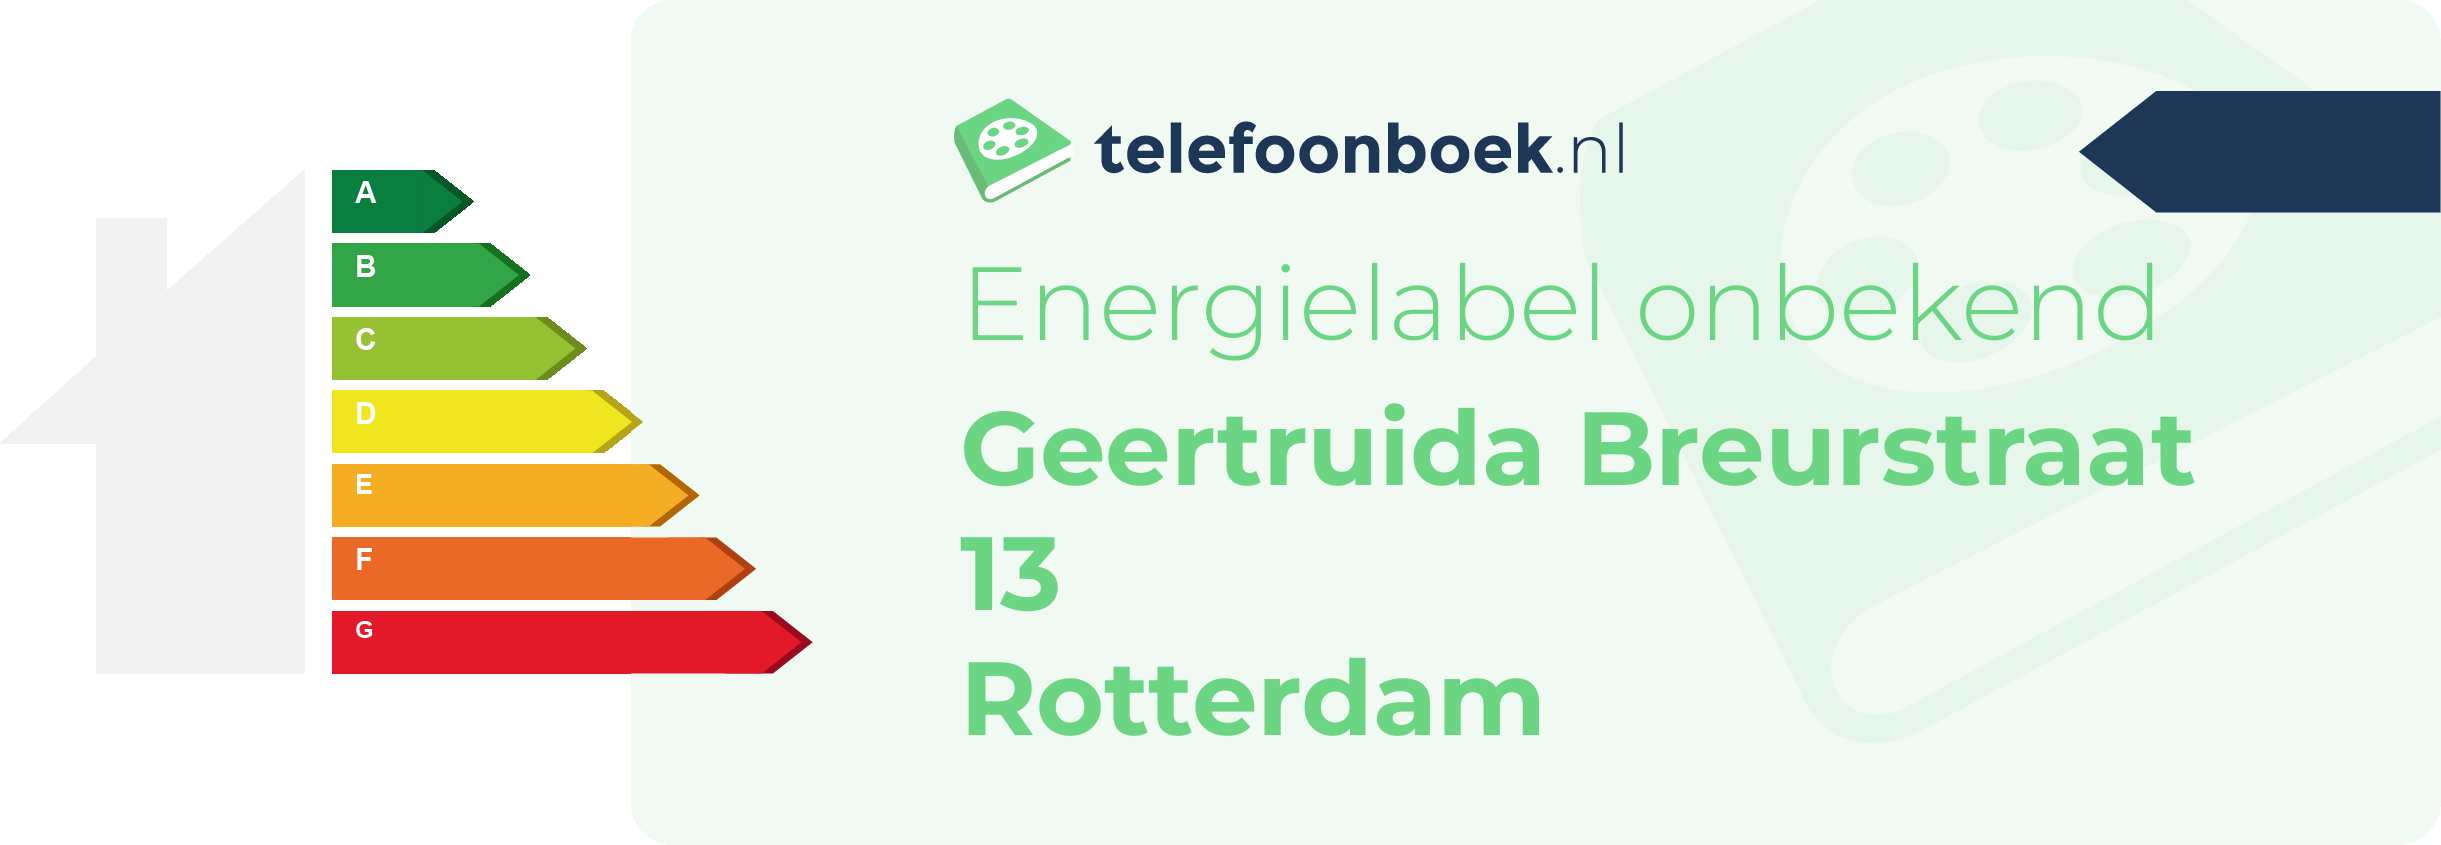 Energielabel Geertruida Breurstraat 13 Rotterdam